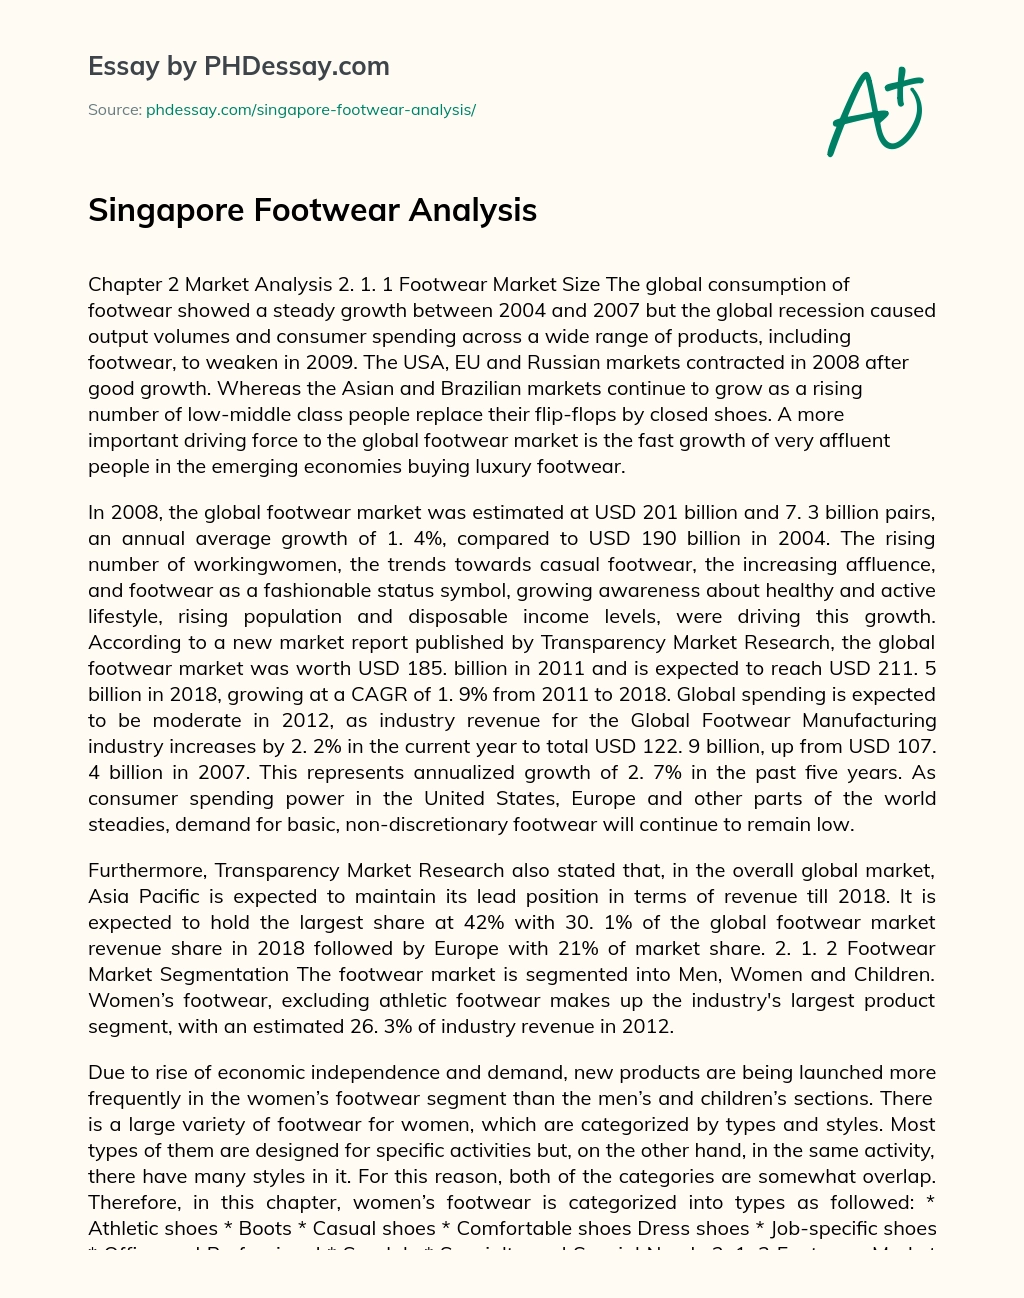 Singapore Footwear Analysis essay